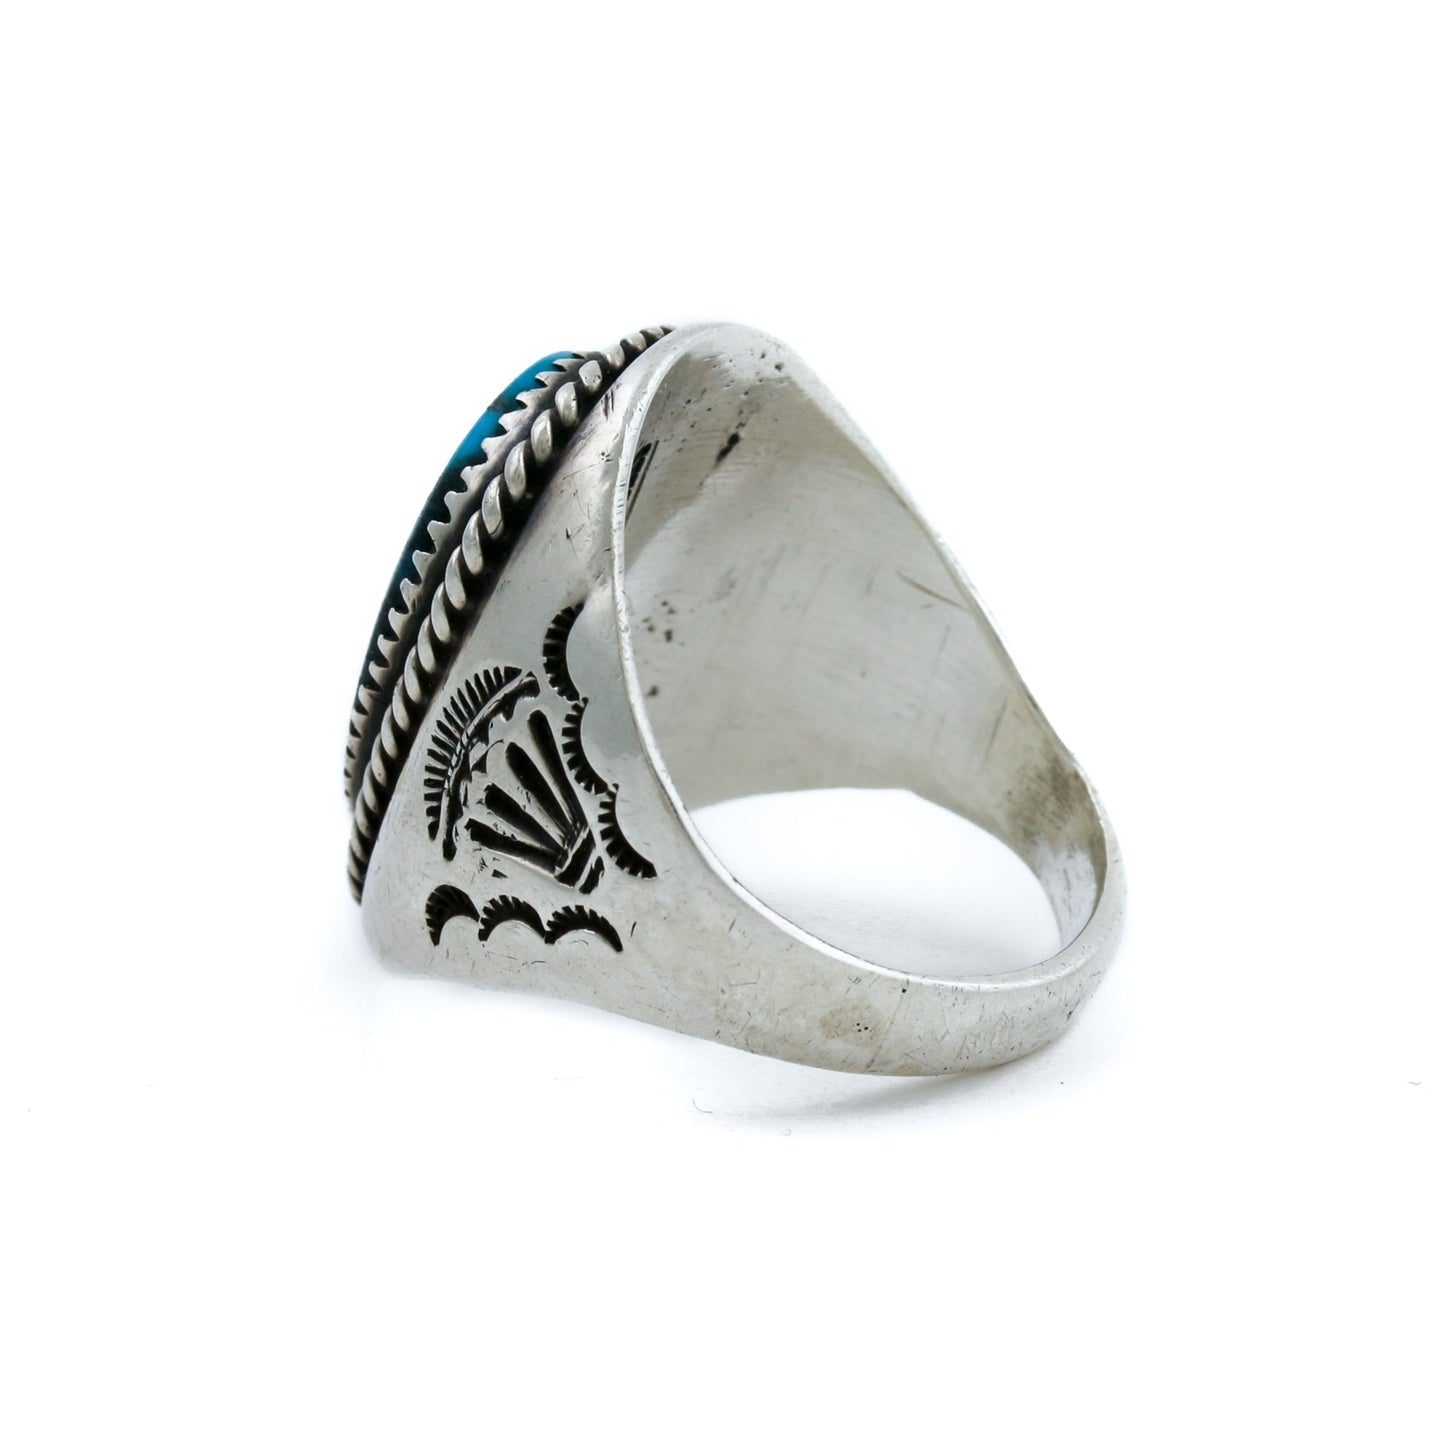 Hubei Turquoise Vintage Navajo Ring - Kingdom Jewelry